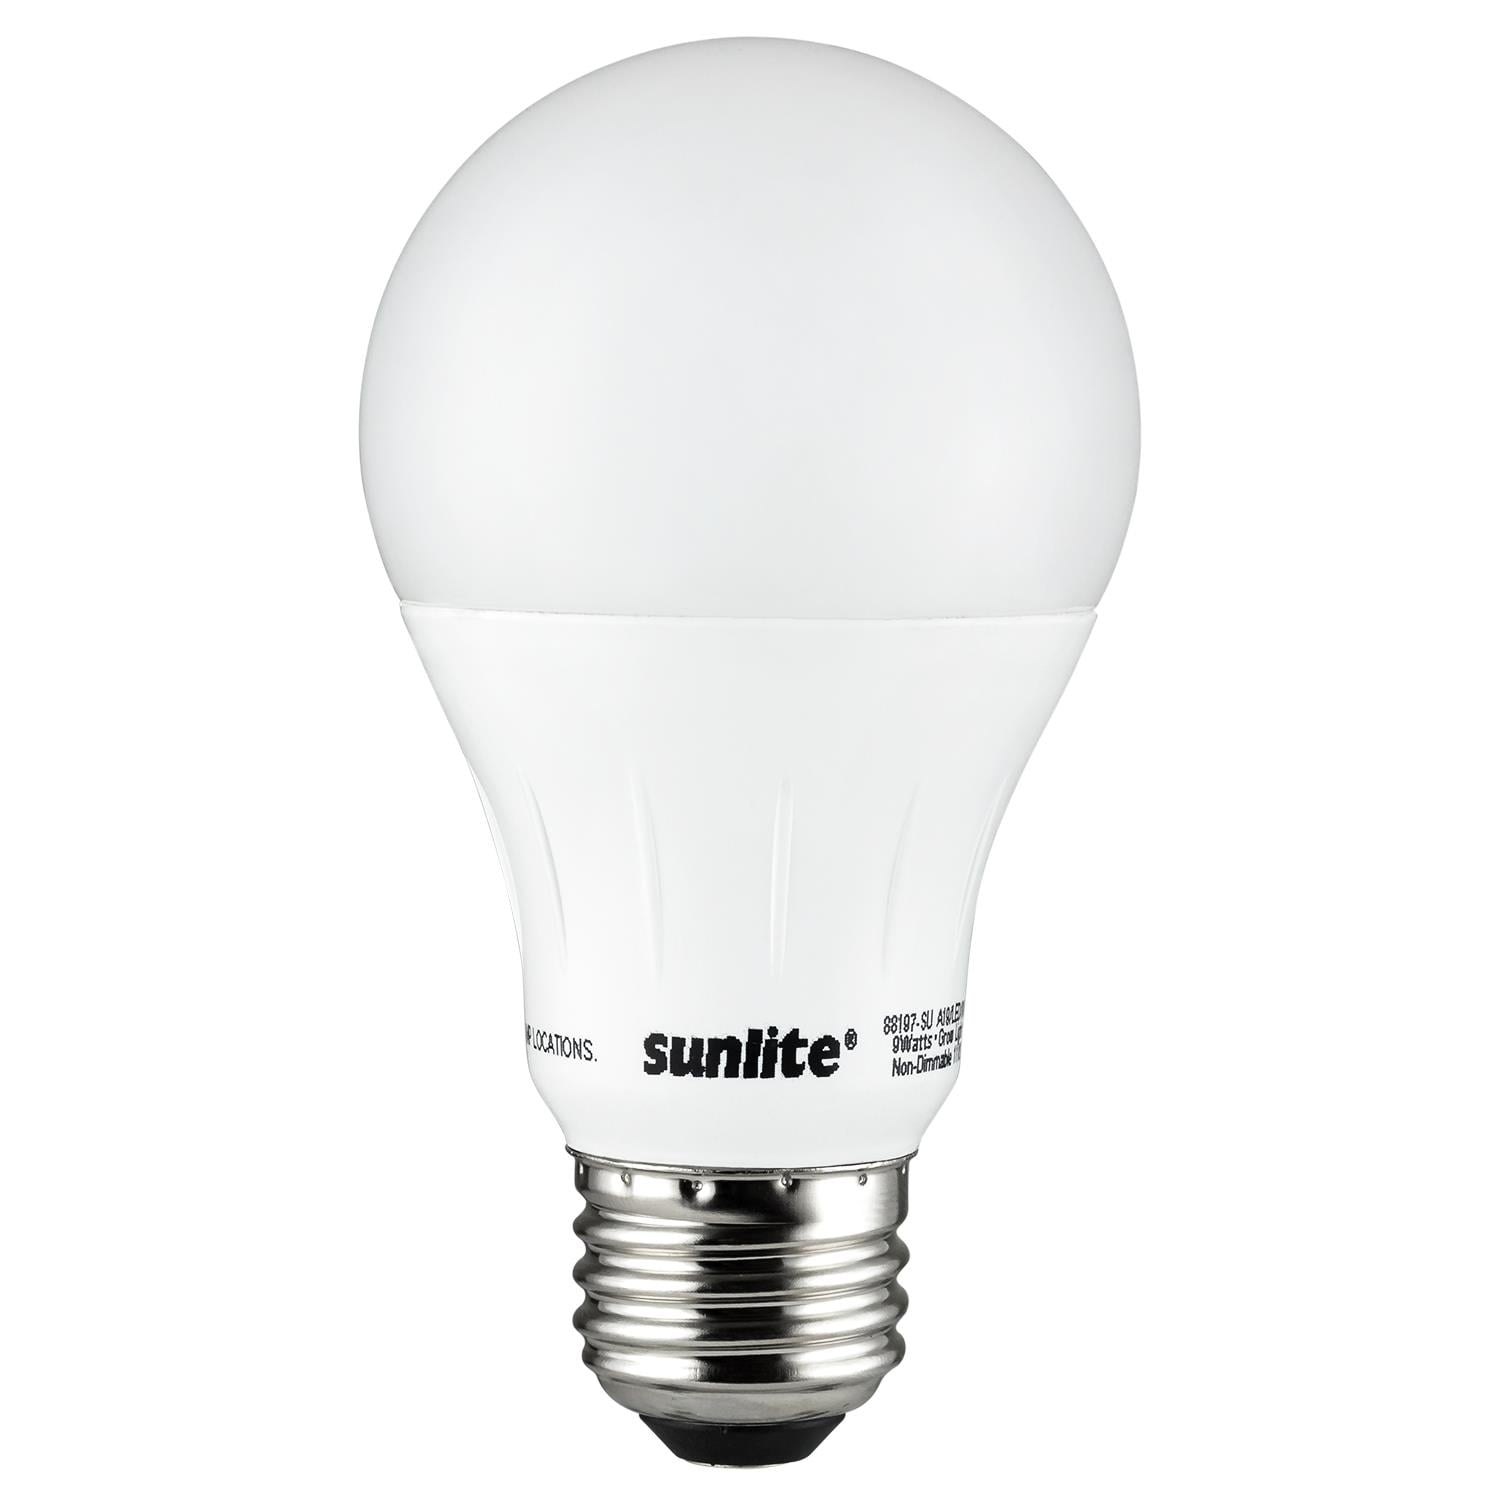 Sunlite A19/LED/9W 9 Watt A19 Lamp Medium (E26) Base - Walmart.com ...